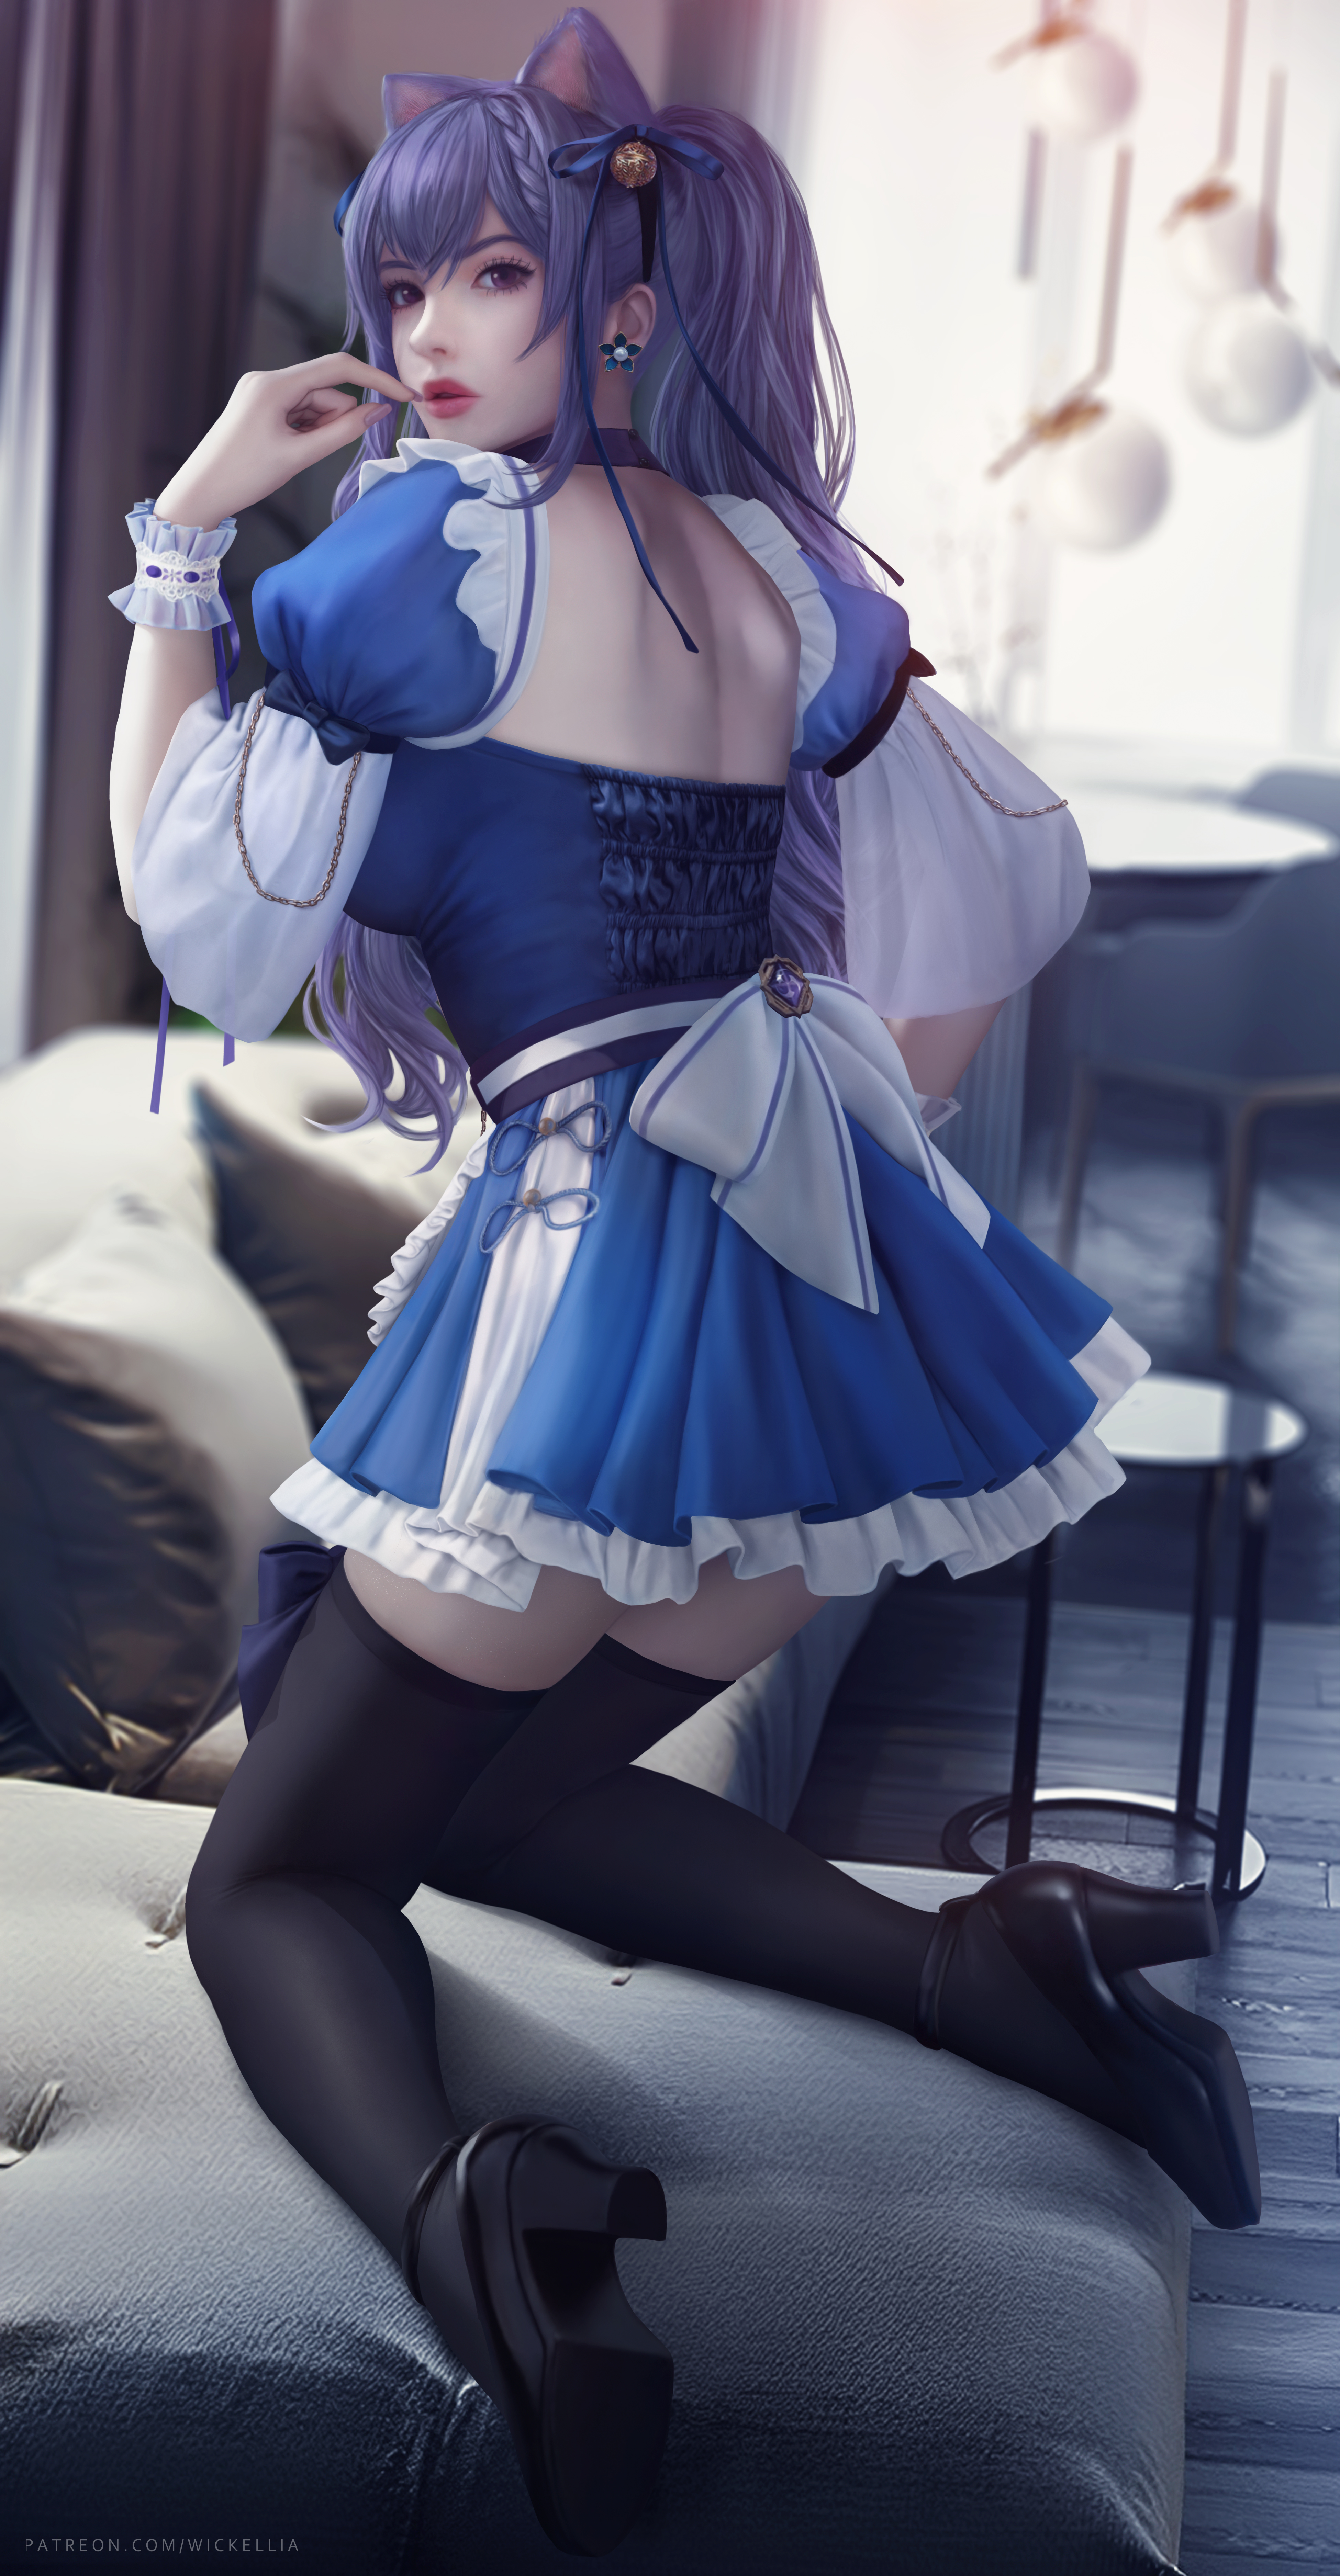 Keqing Genshin Impact Genshin Impact Video Games Anime Anime Girls Cat Ears Maid Maid Outfit Dress 2 3900x7500